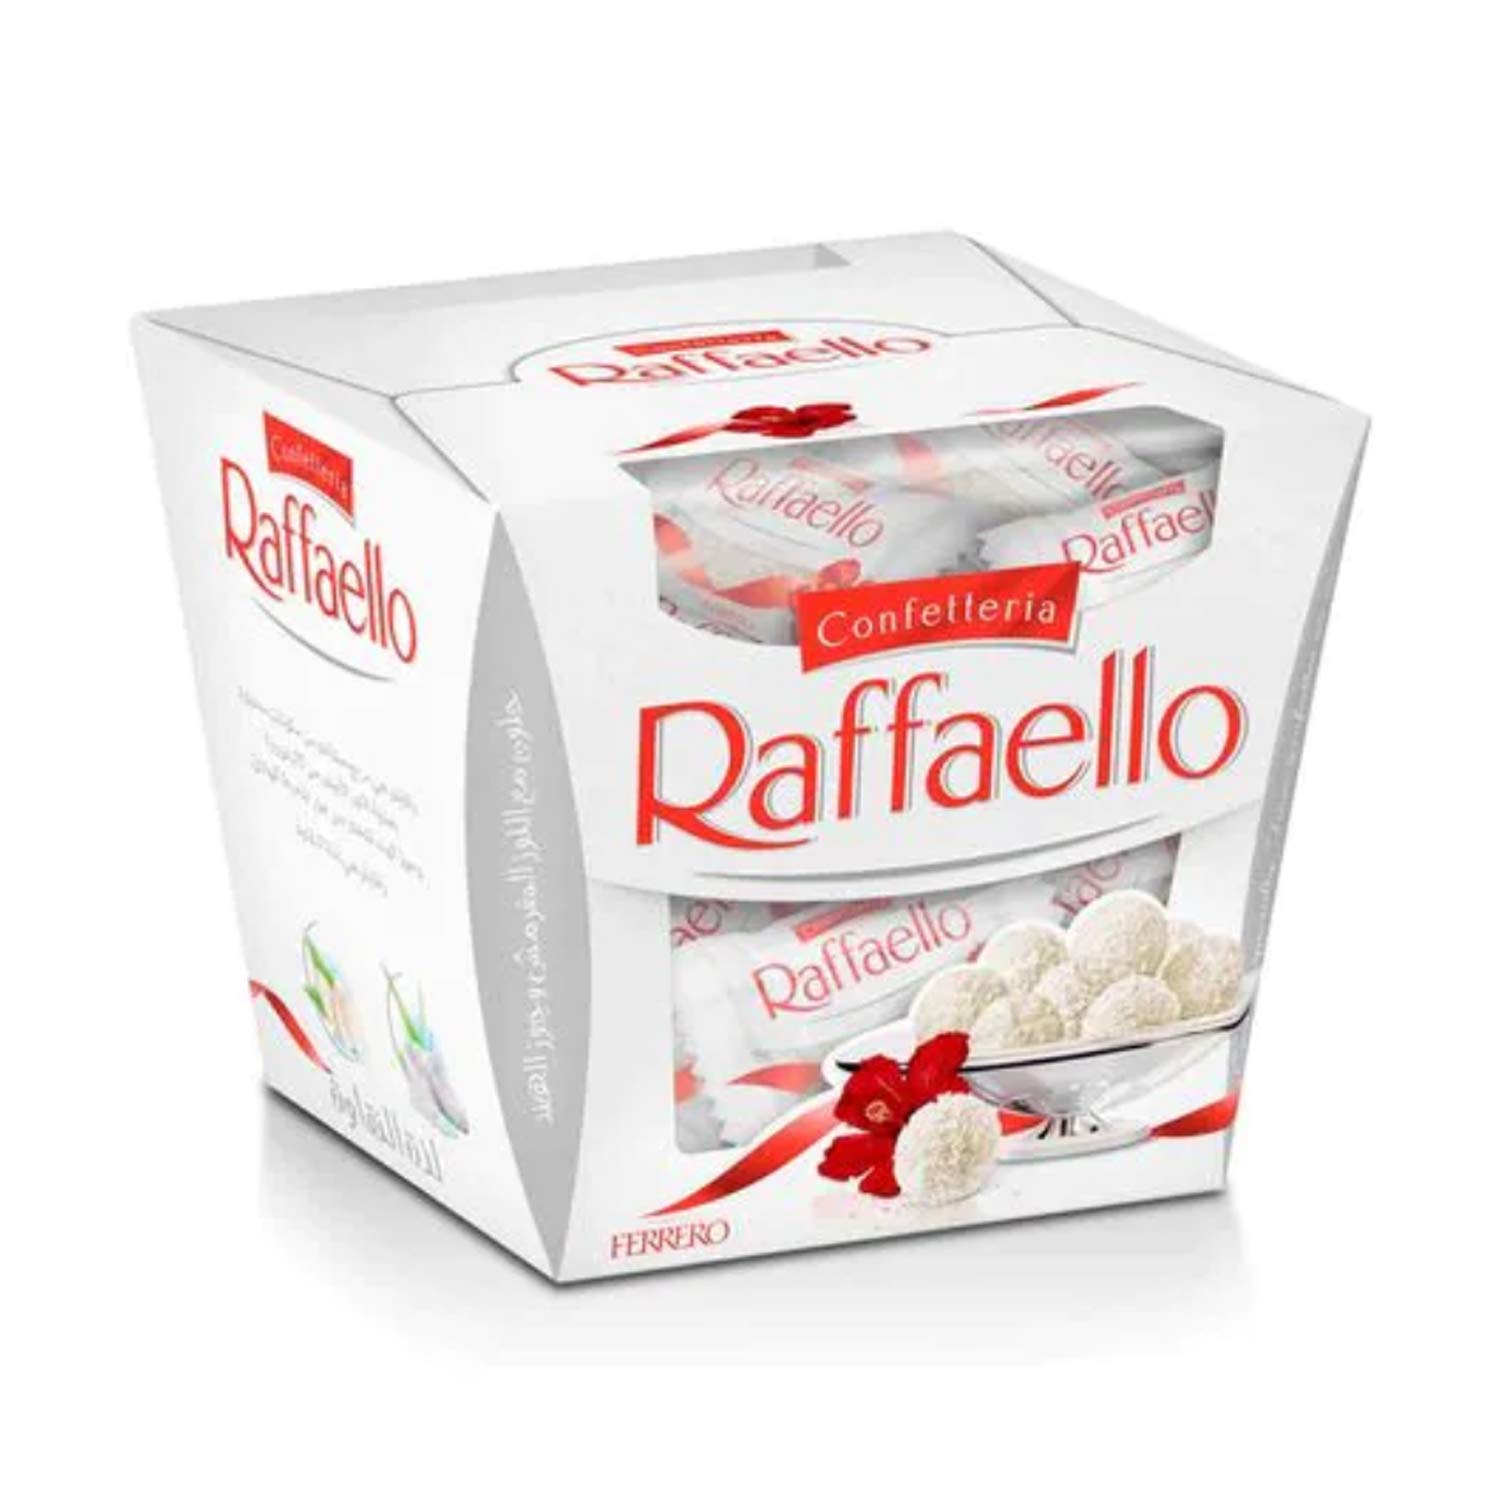 Ferrero Raffaello, 150 g